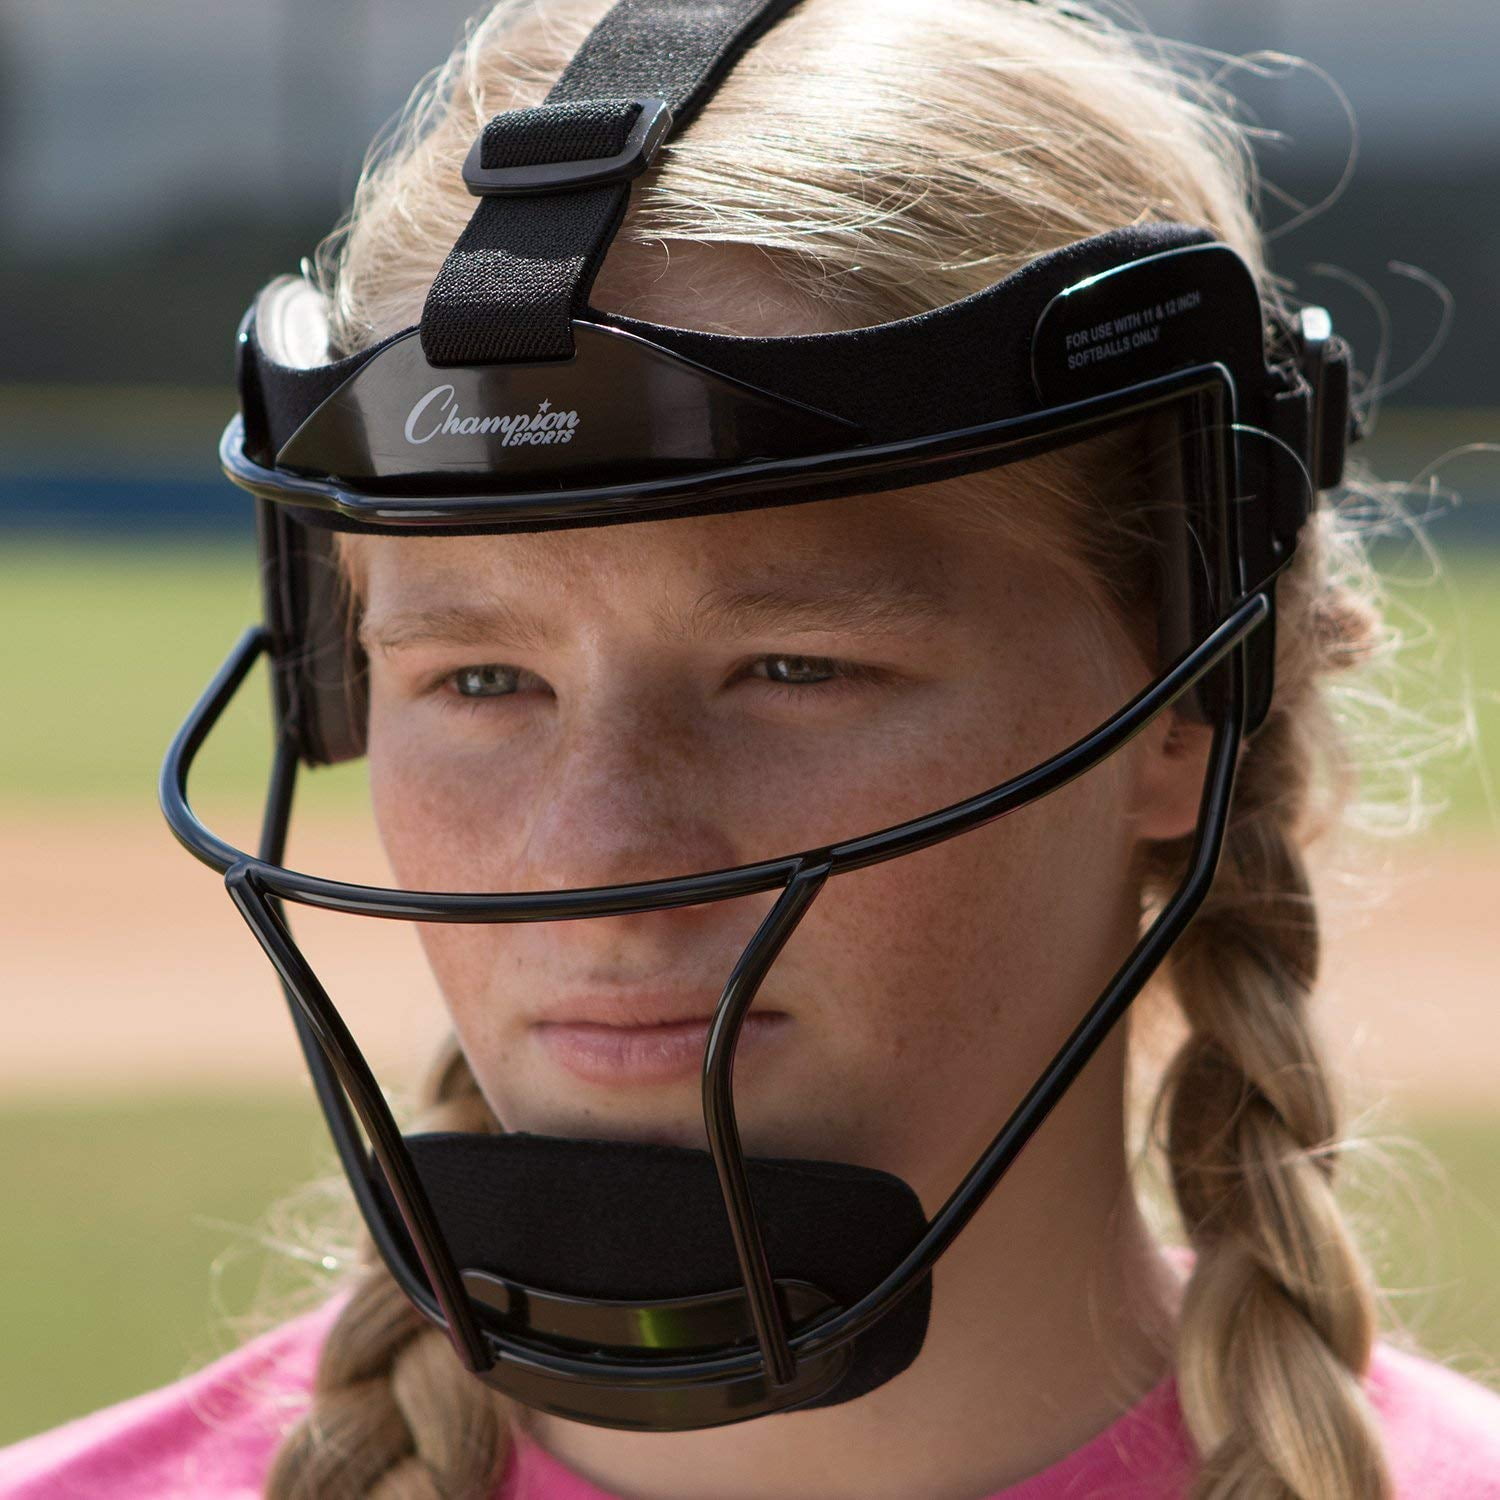 Champion Sports Softball Fielder's Face Mask, Pink, Youth Size 6.25-6.75